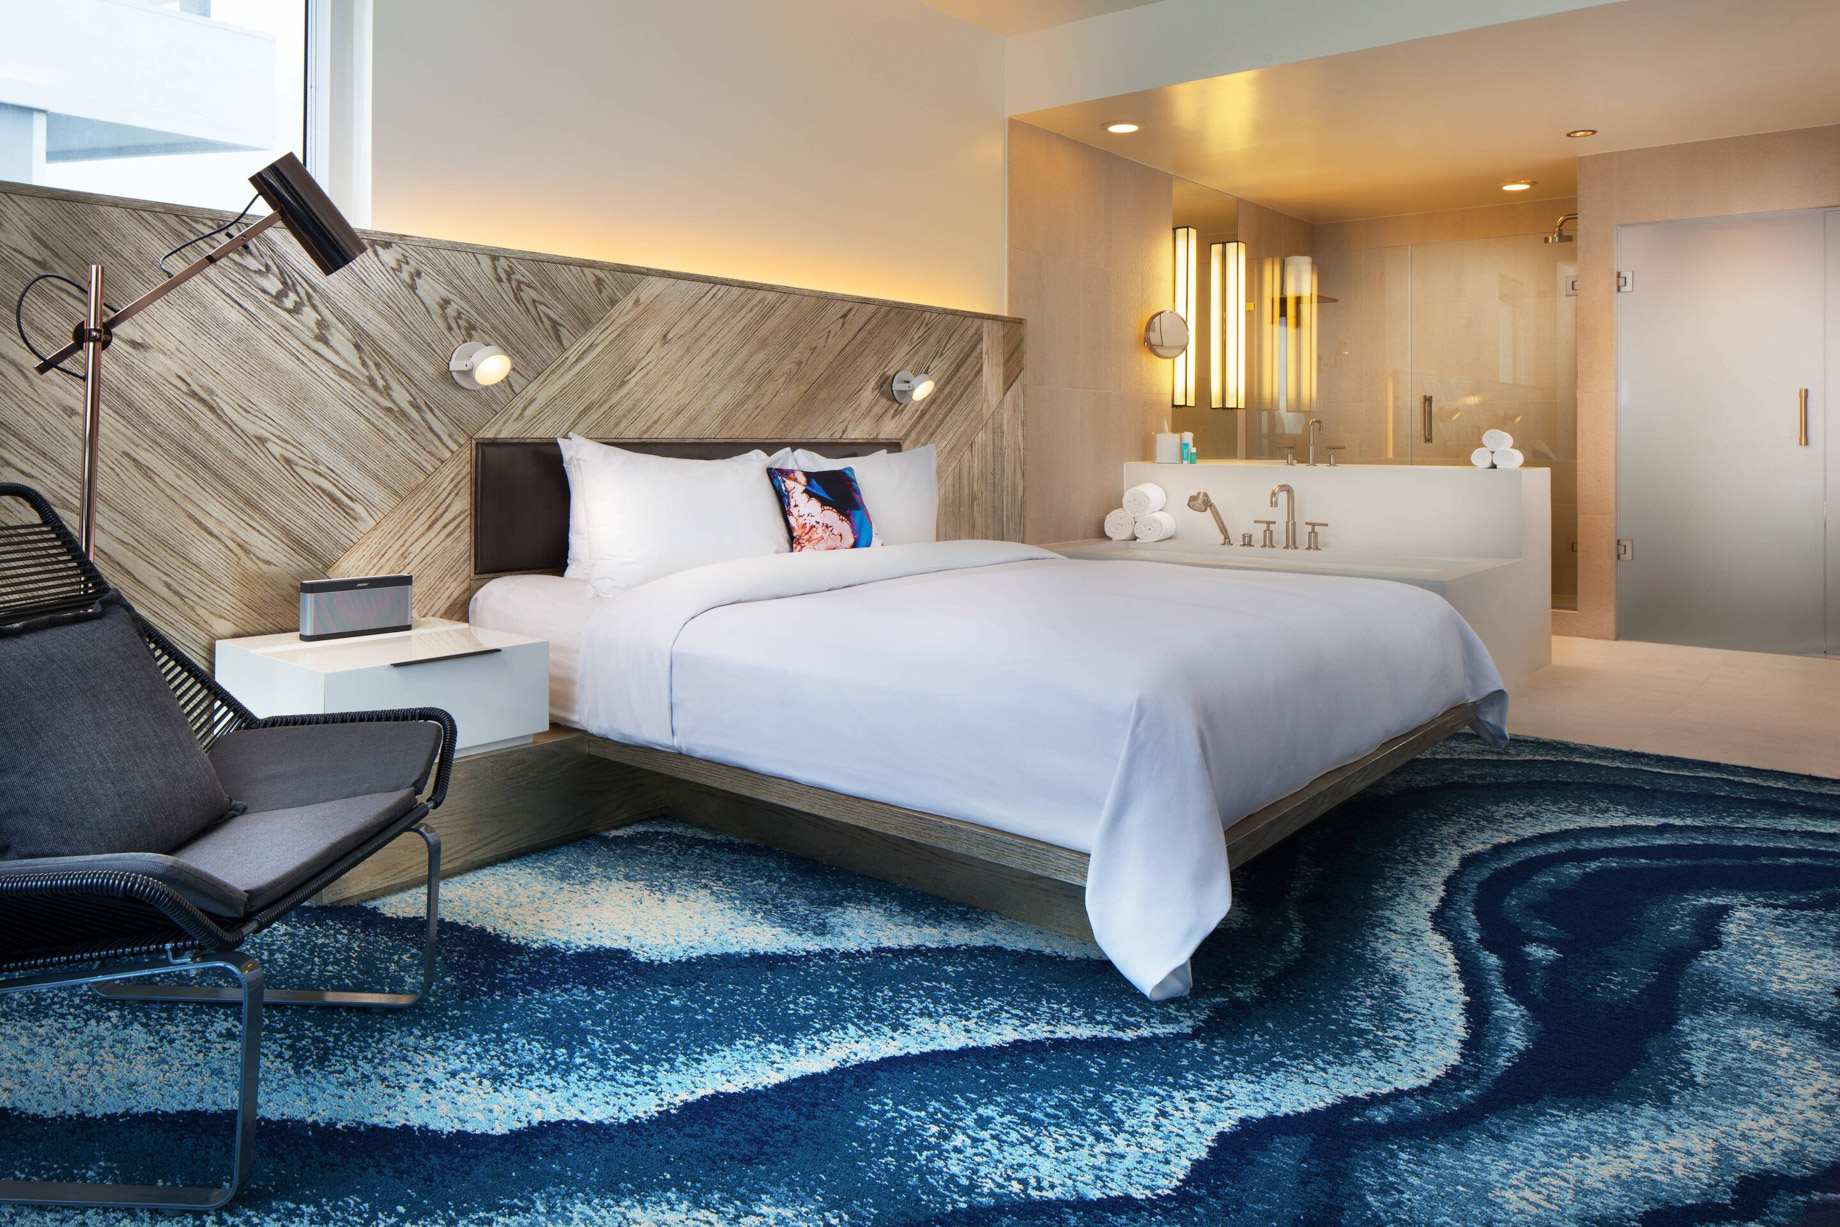 W Fort Lauderdale Hotel – Fort Lauderdale, FL, USA – Residential Suite Bedroom